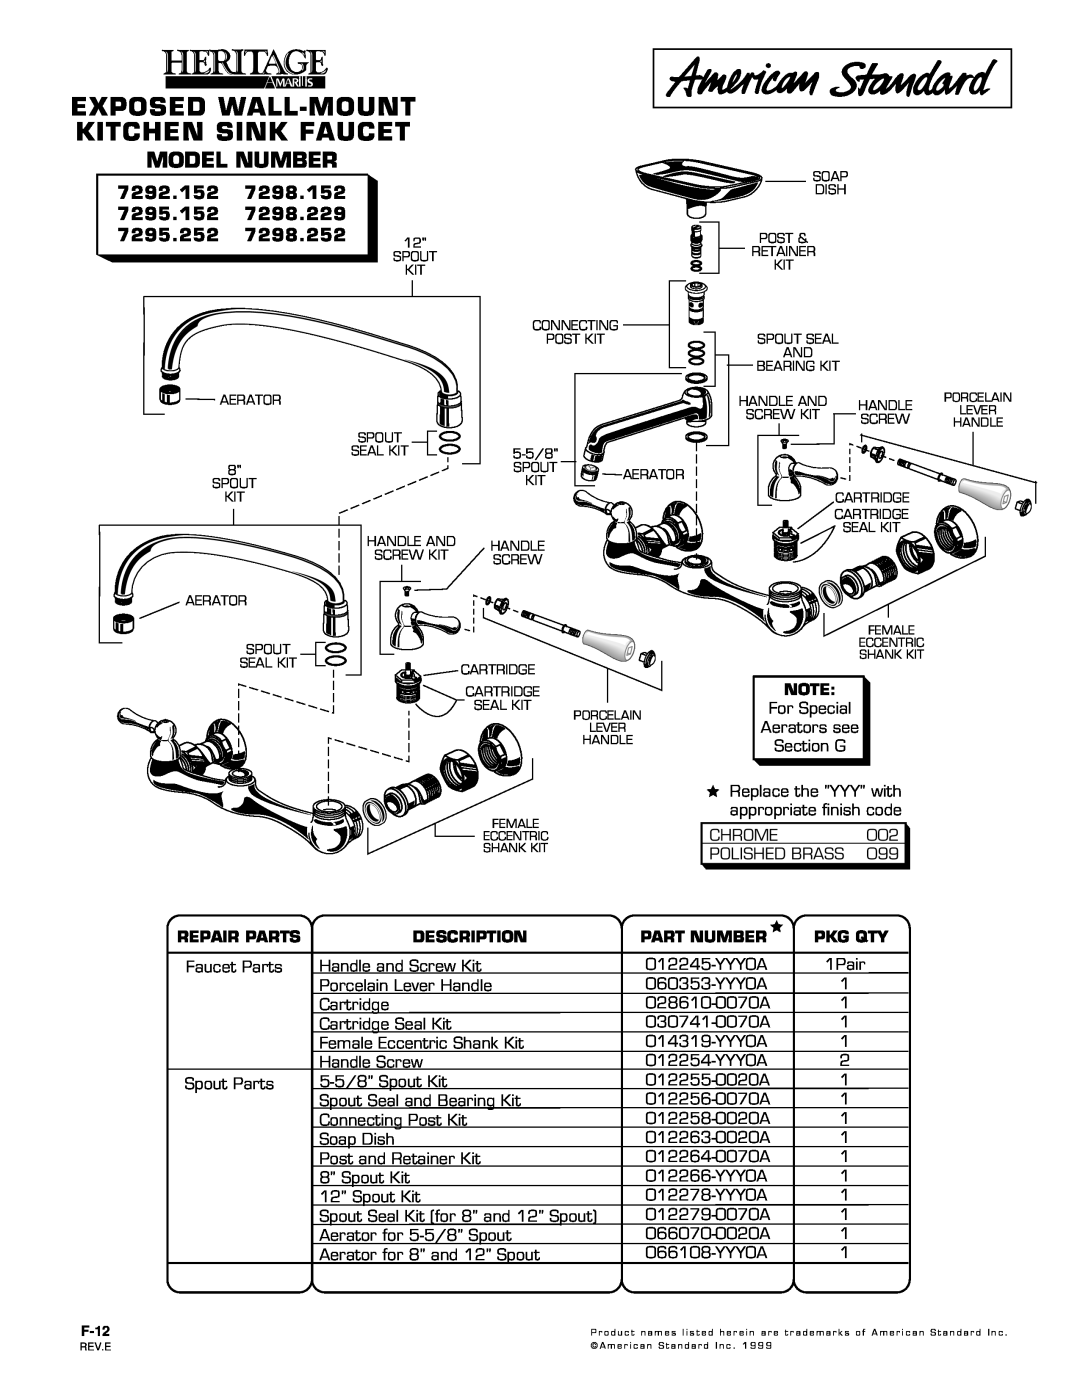 American Standard 7298.252 manual Exposed Wall-Mountkitchen Sink Faucet, Model Number, 7292.152, Repair Parts, Description 